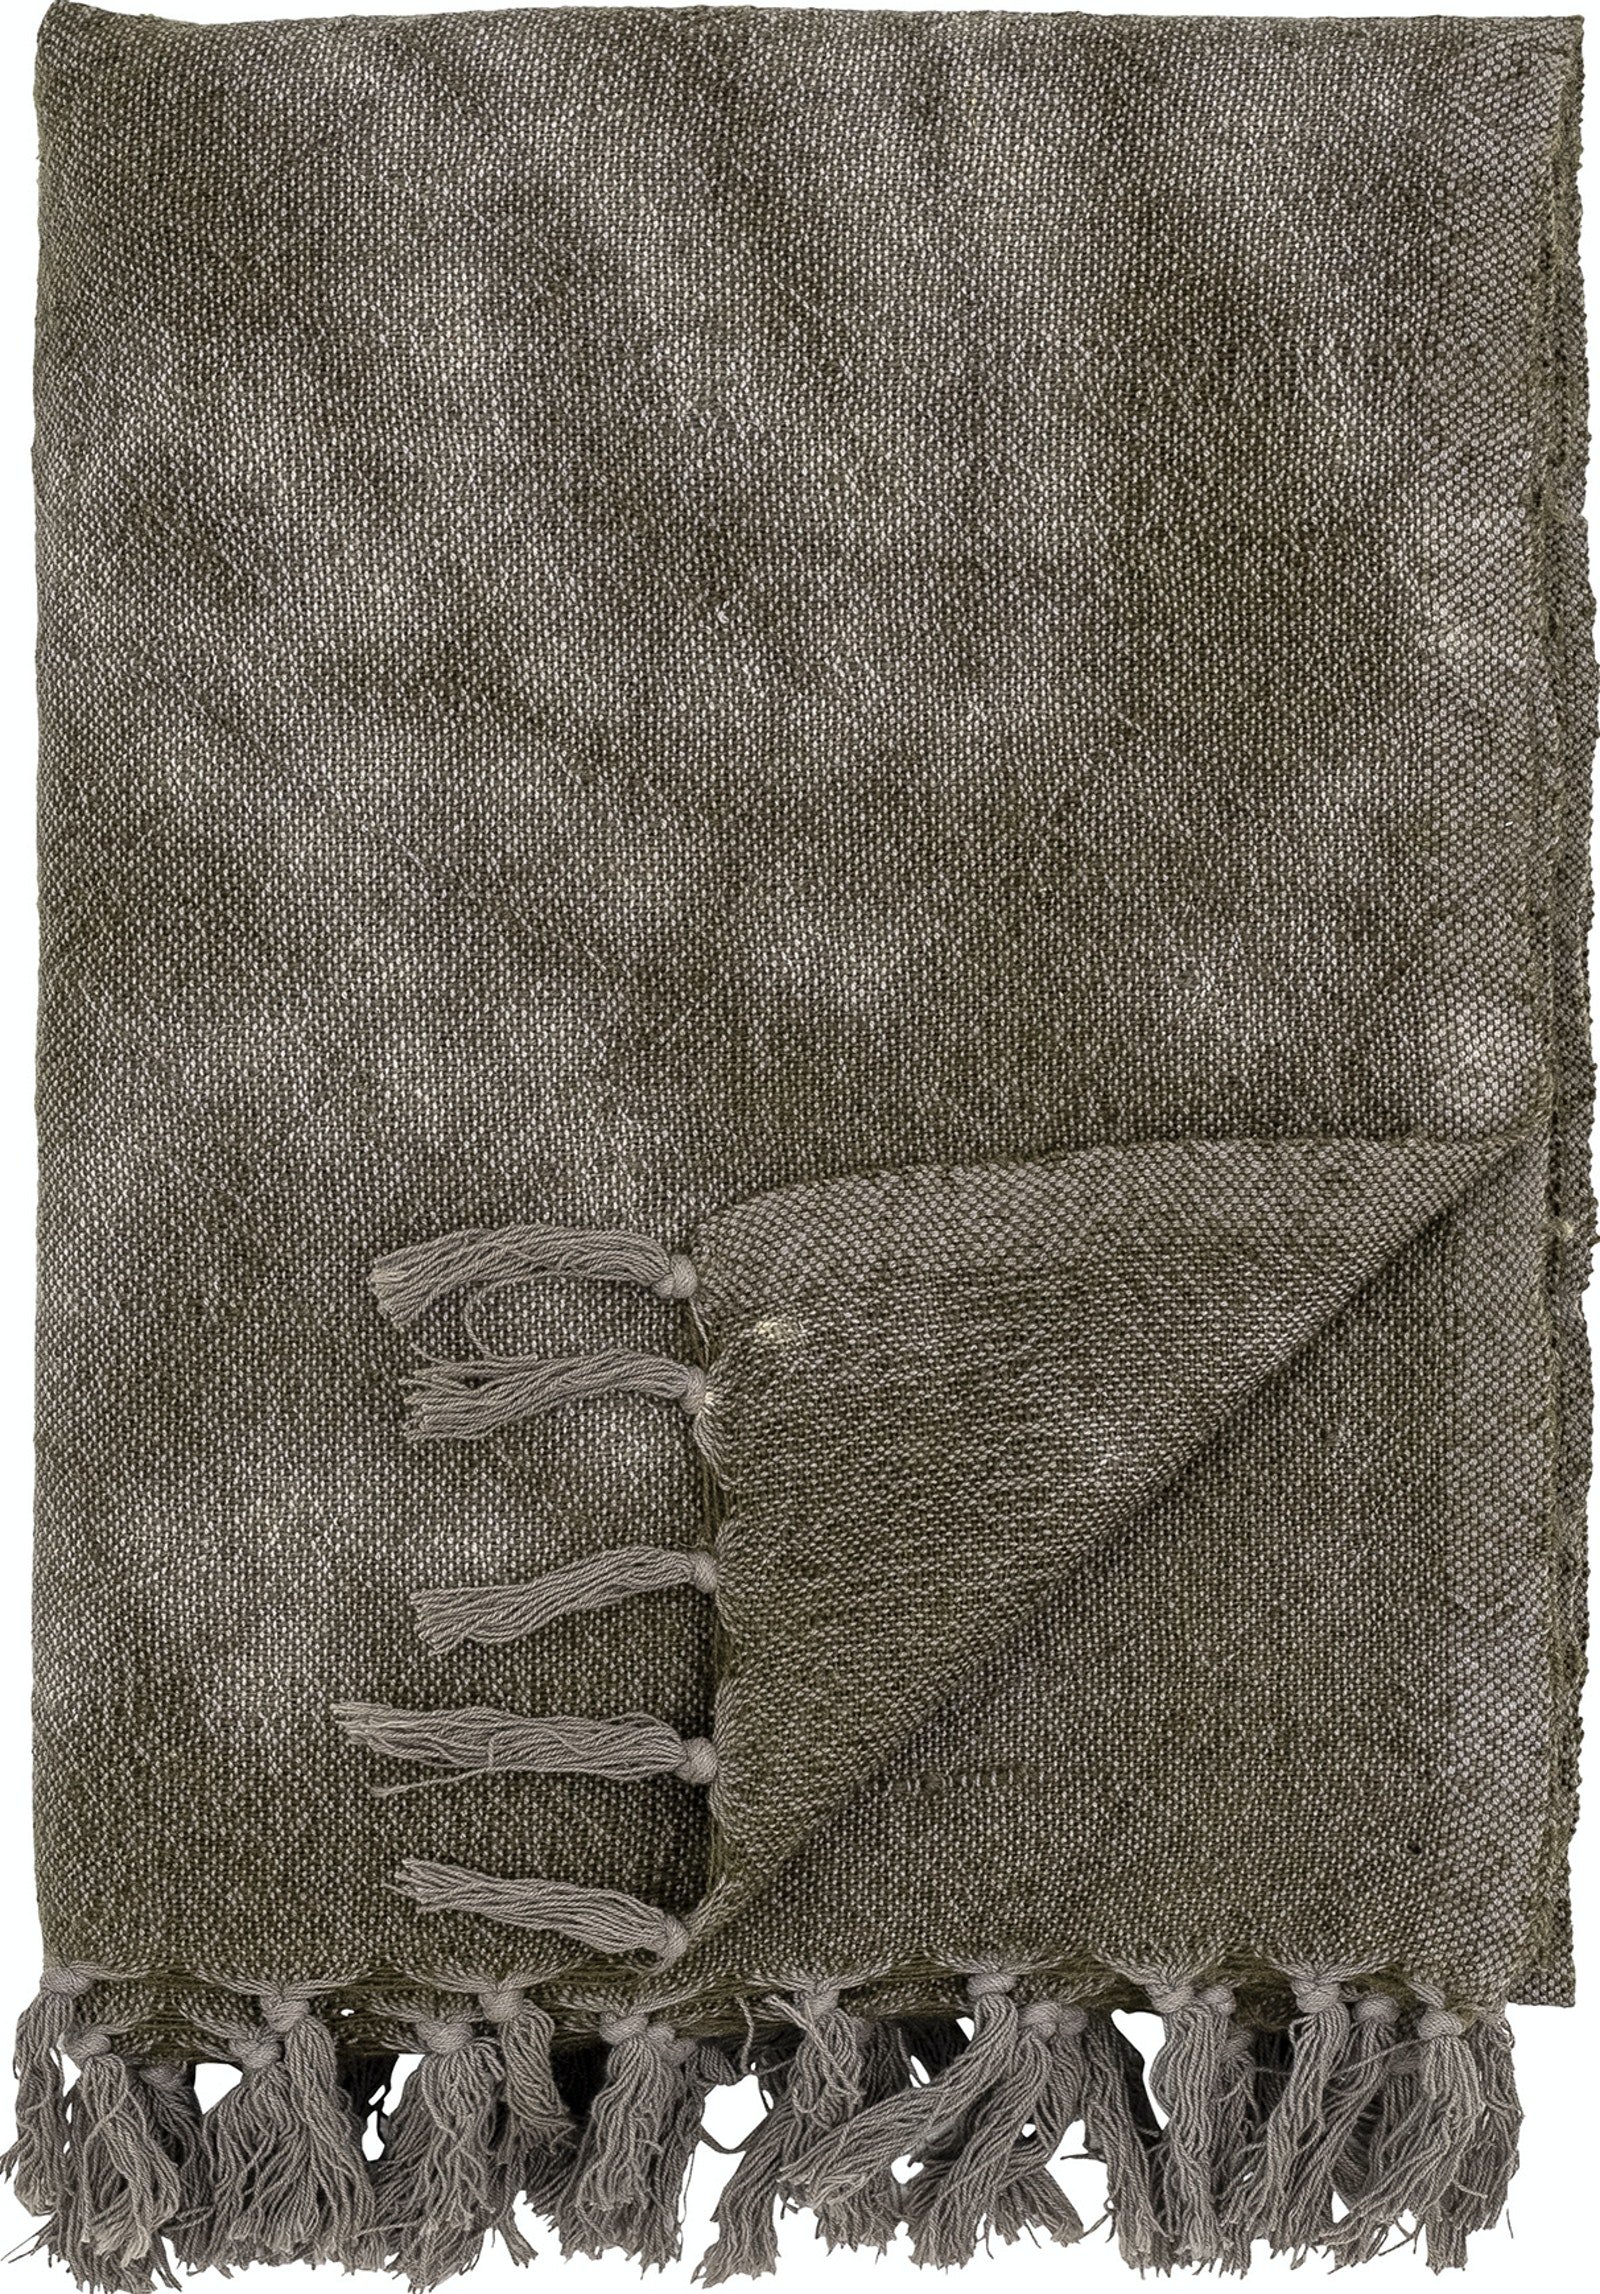 Ginger, Plaid, Uld by Bloomingville (B: 125 cm. x L: 150 cm., Grøn)